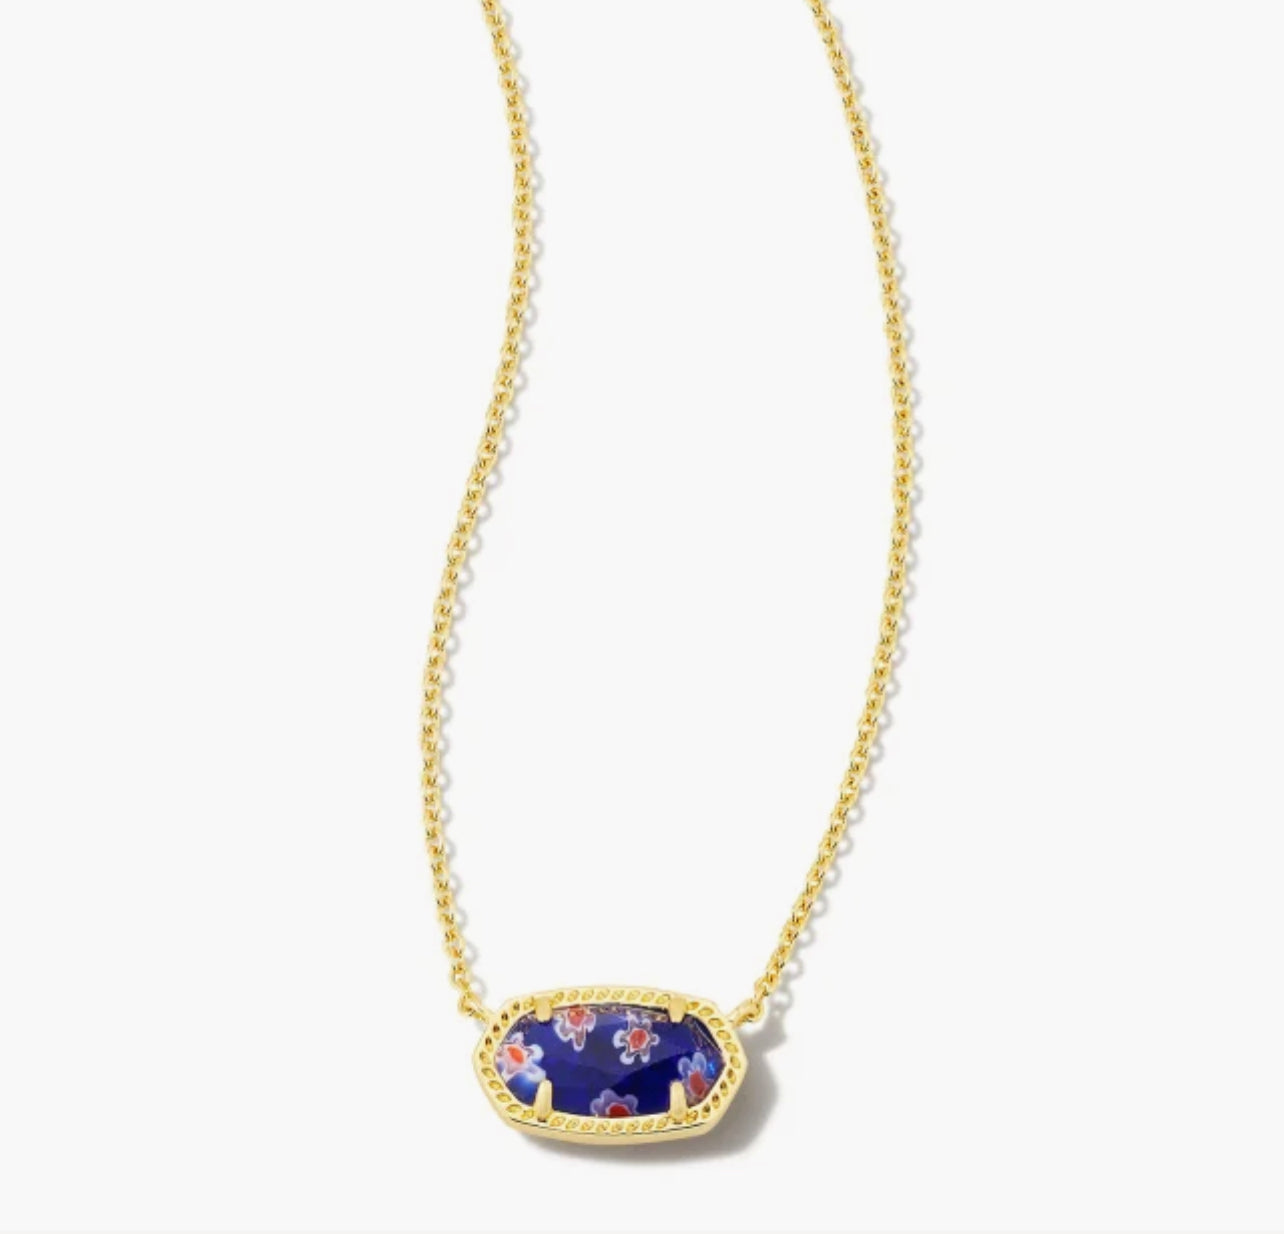 Kendra Scott-Elisa Gold Pendant Necklace in Cobalt Blue Mosaic Glass 9608853027